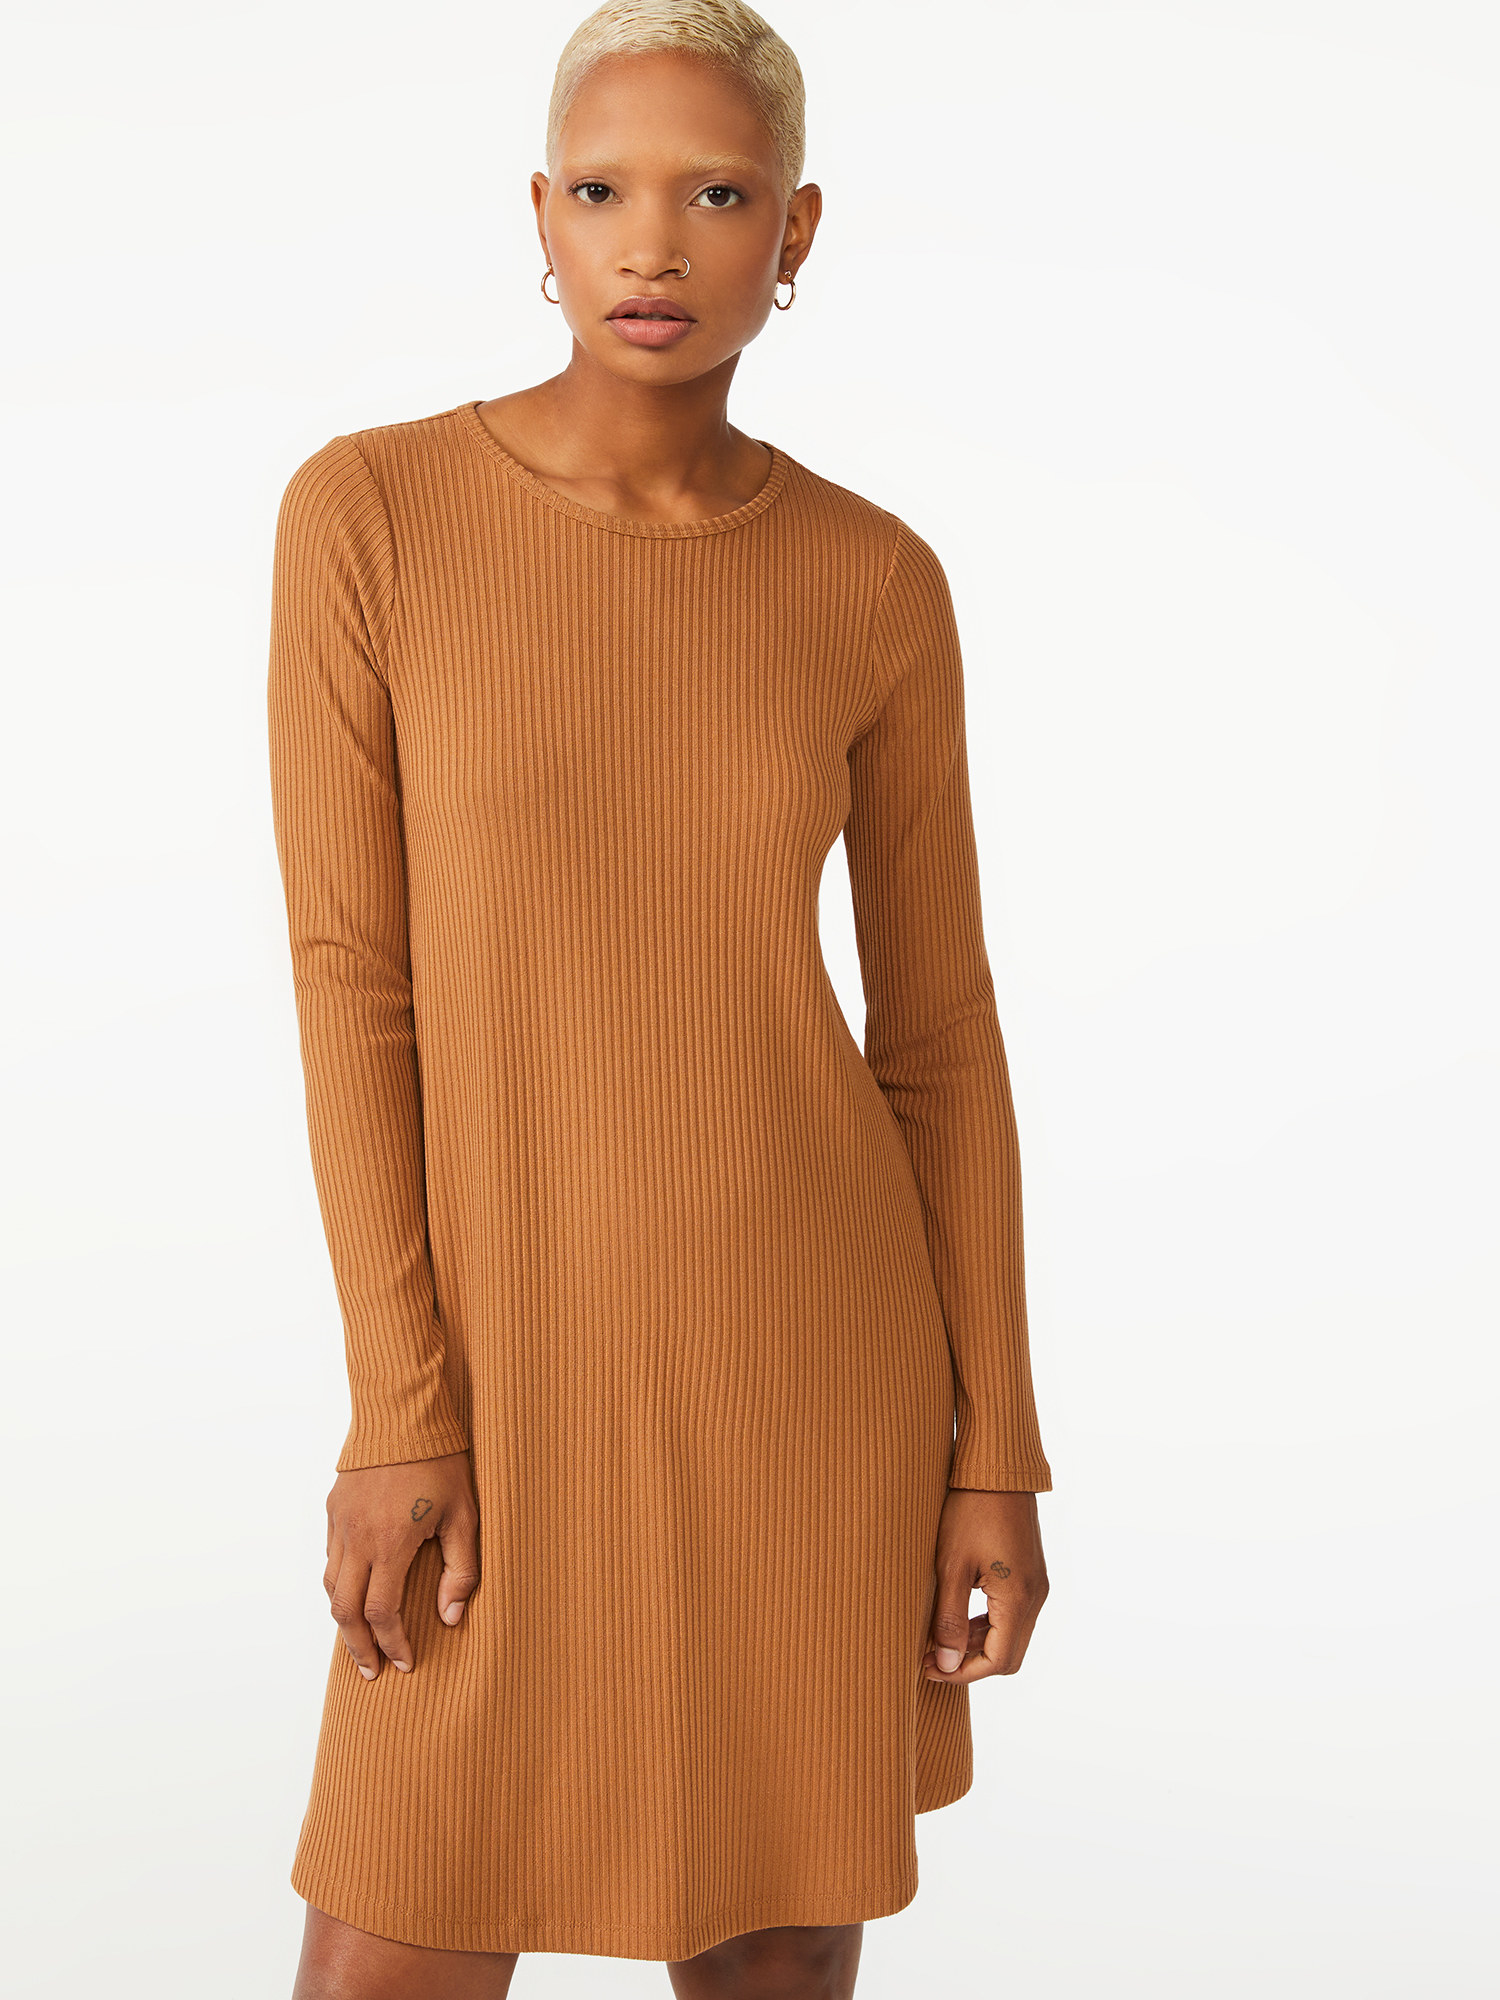 Model wearing the brown dress